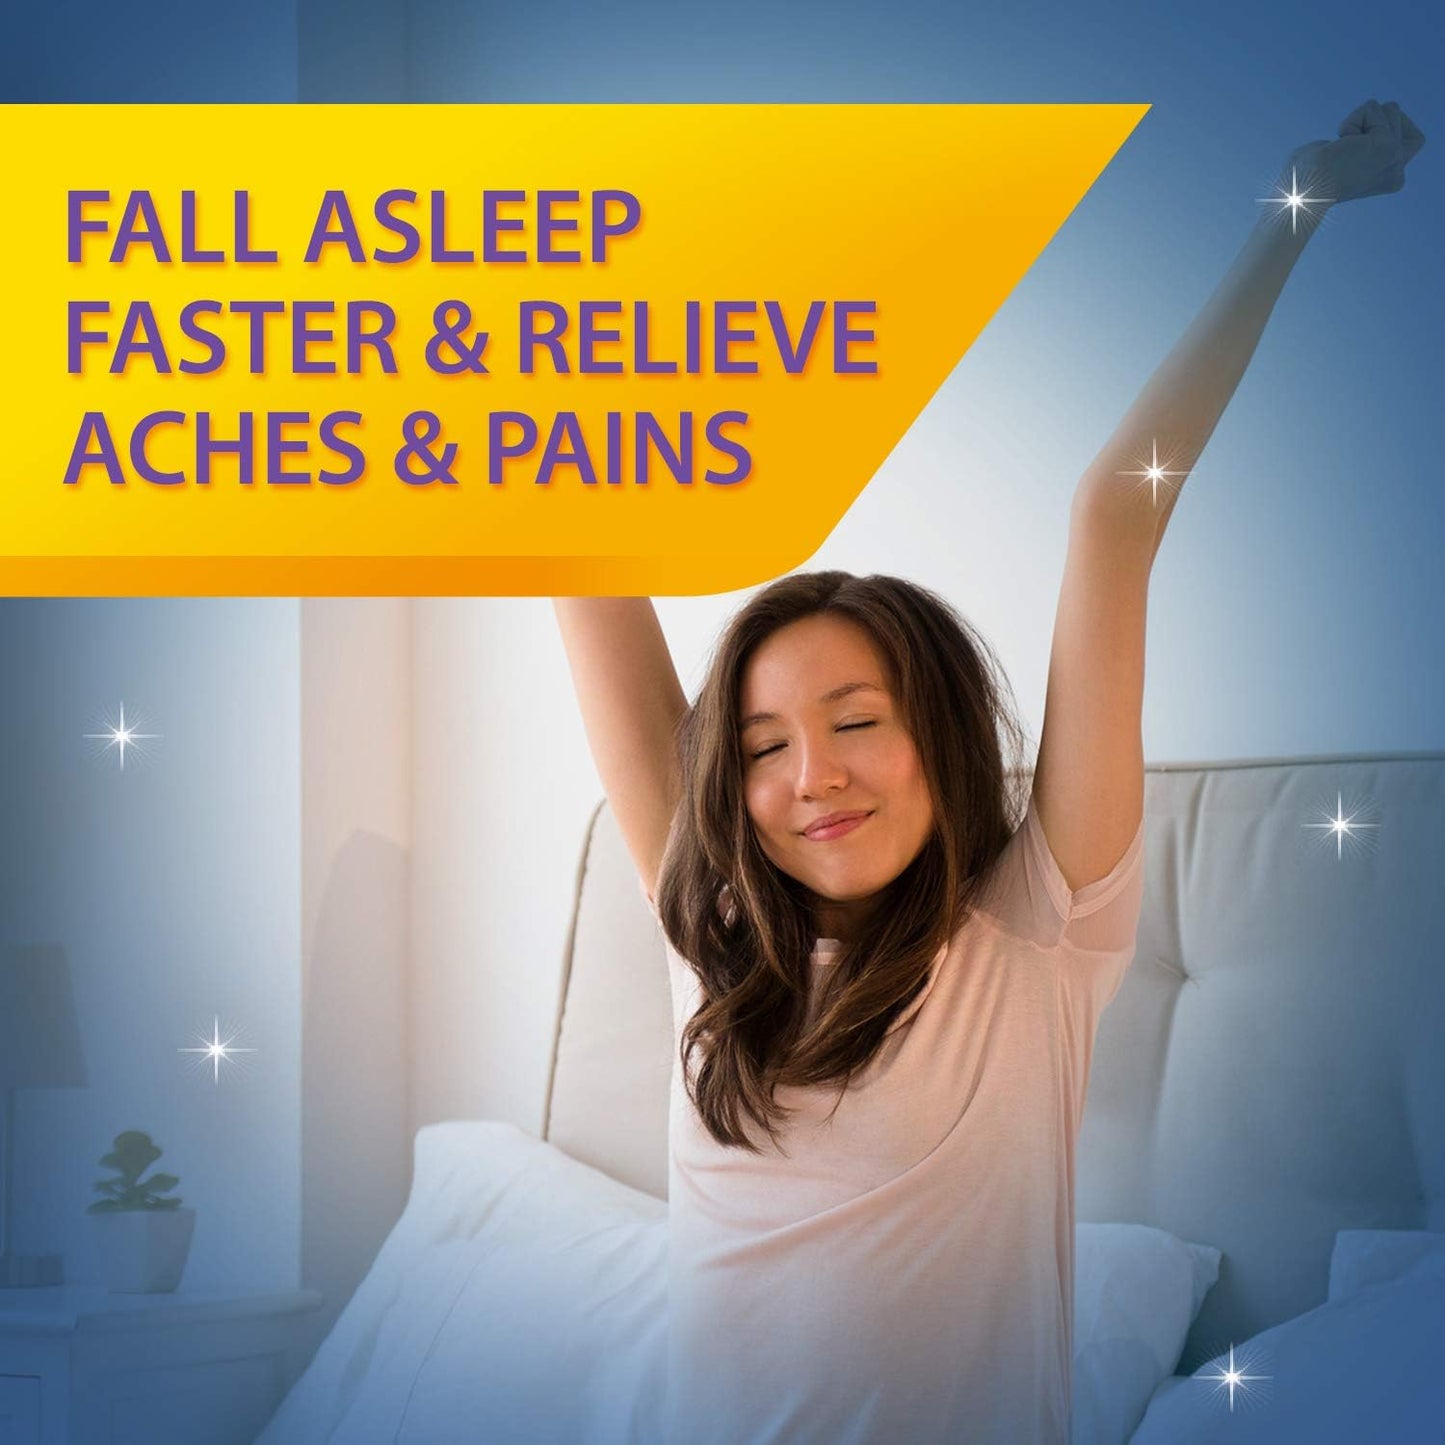 Unisom PM Pain Nighttime Sleep-aid + Pain Reliever, Acetaminophen & Diphenhydramine HCI, 30 Caplets, 50mg